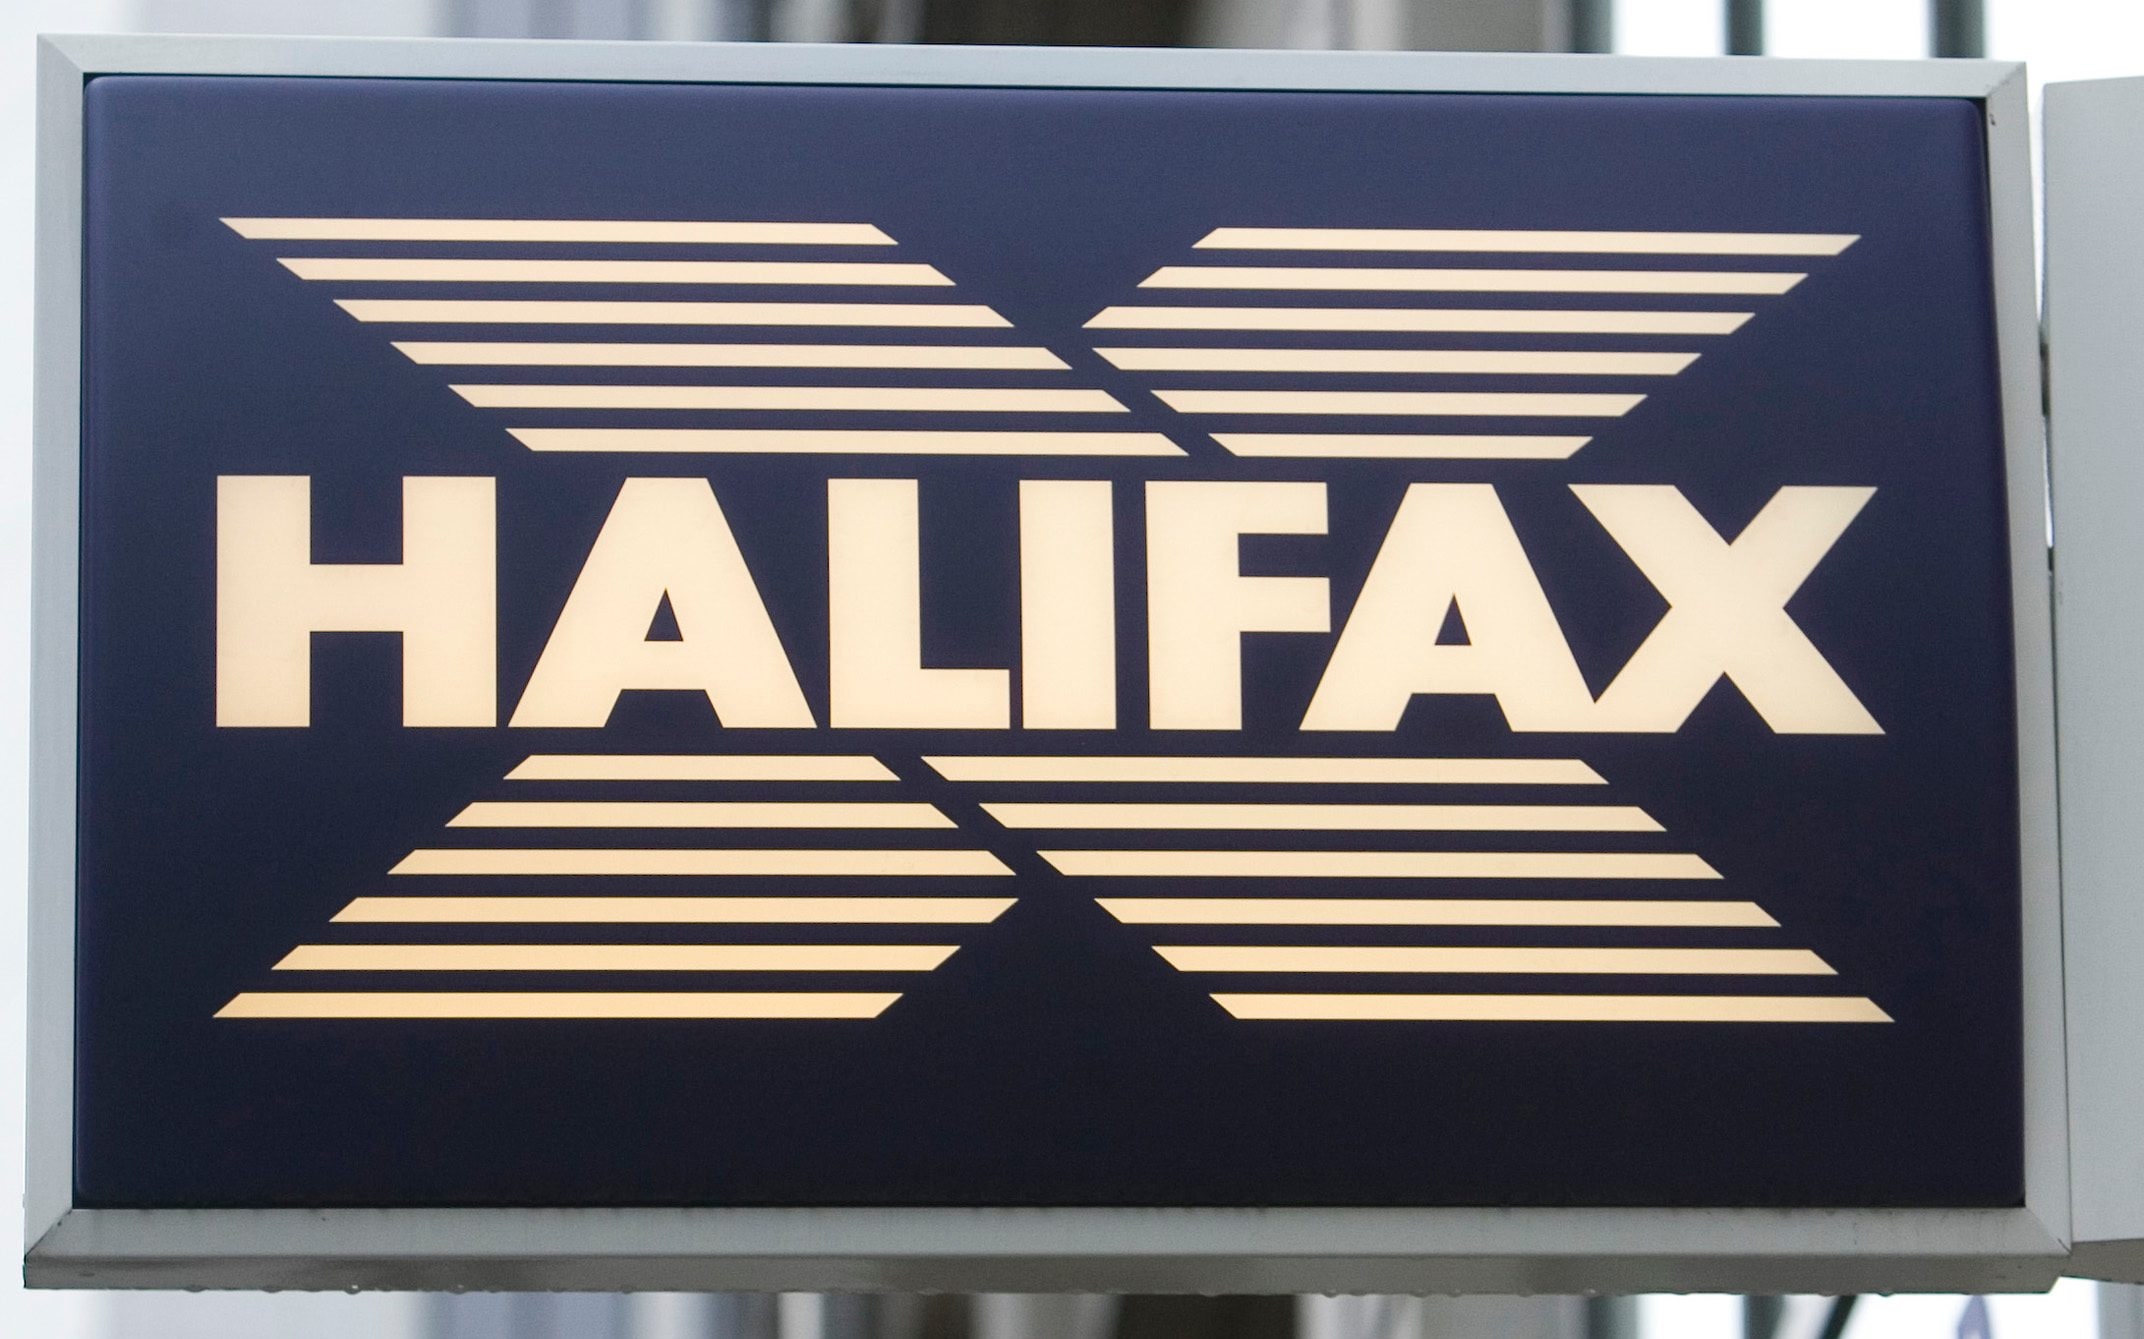 Halifax drops £5-a-month credit card reward, blaming EU rules